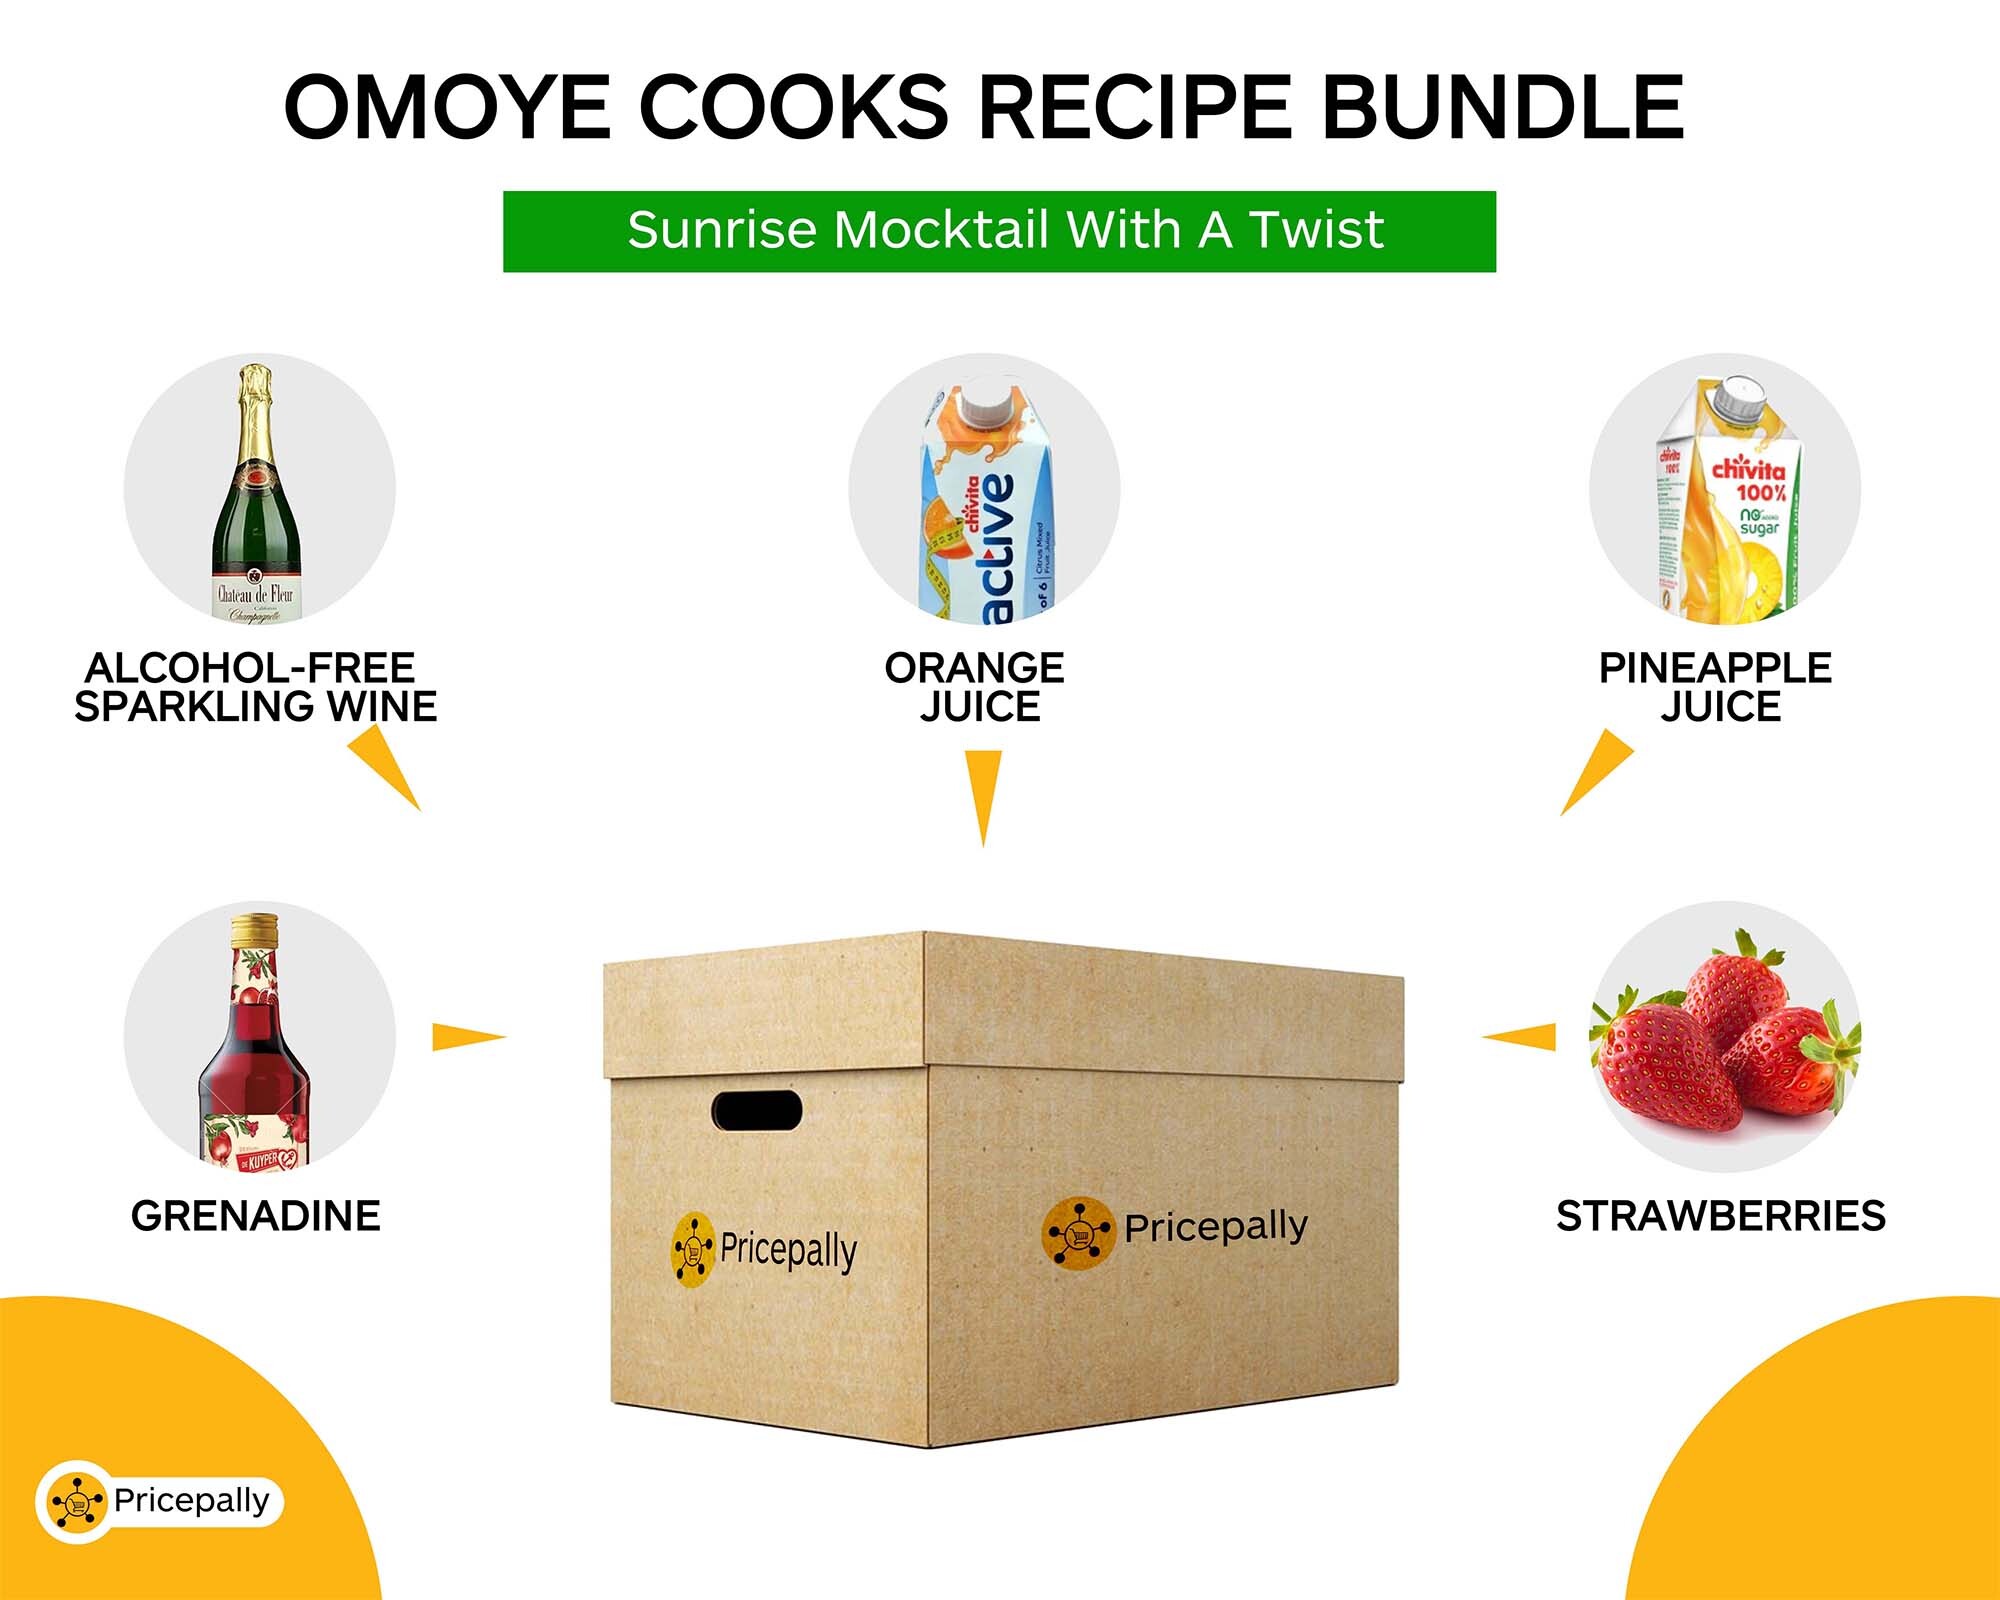 The sunrise mocktail recipe bundle box on PricePally